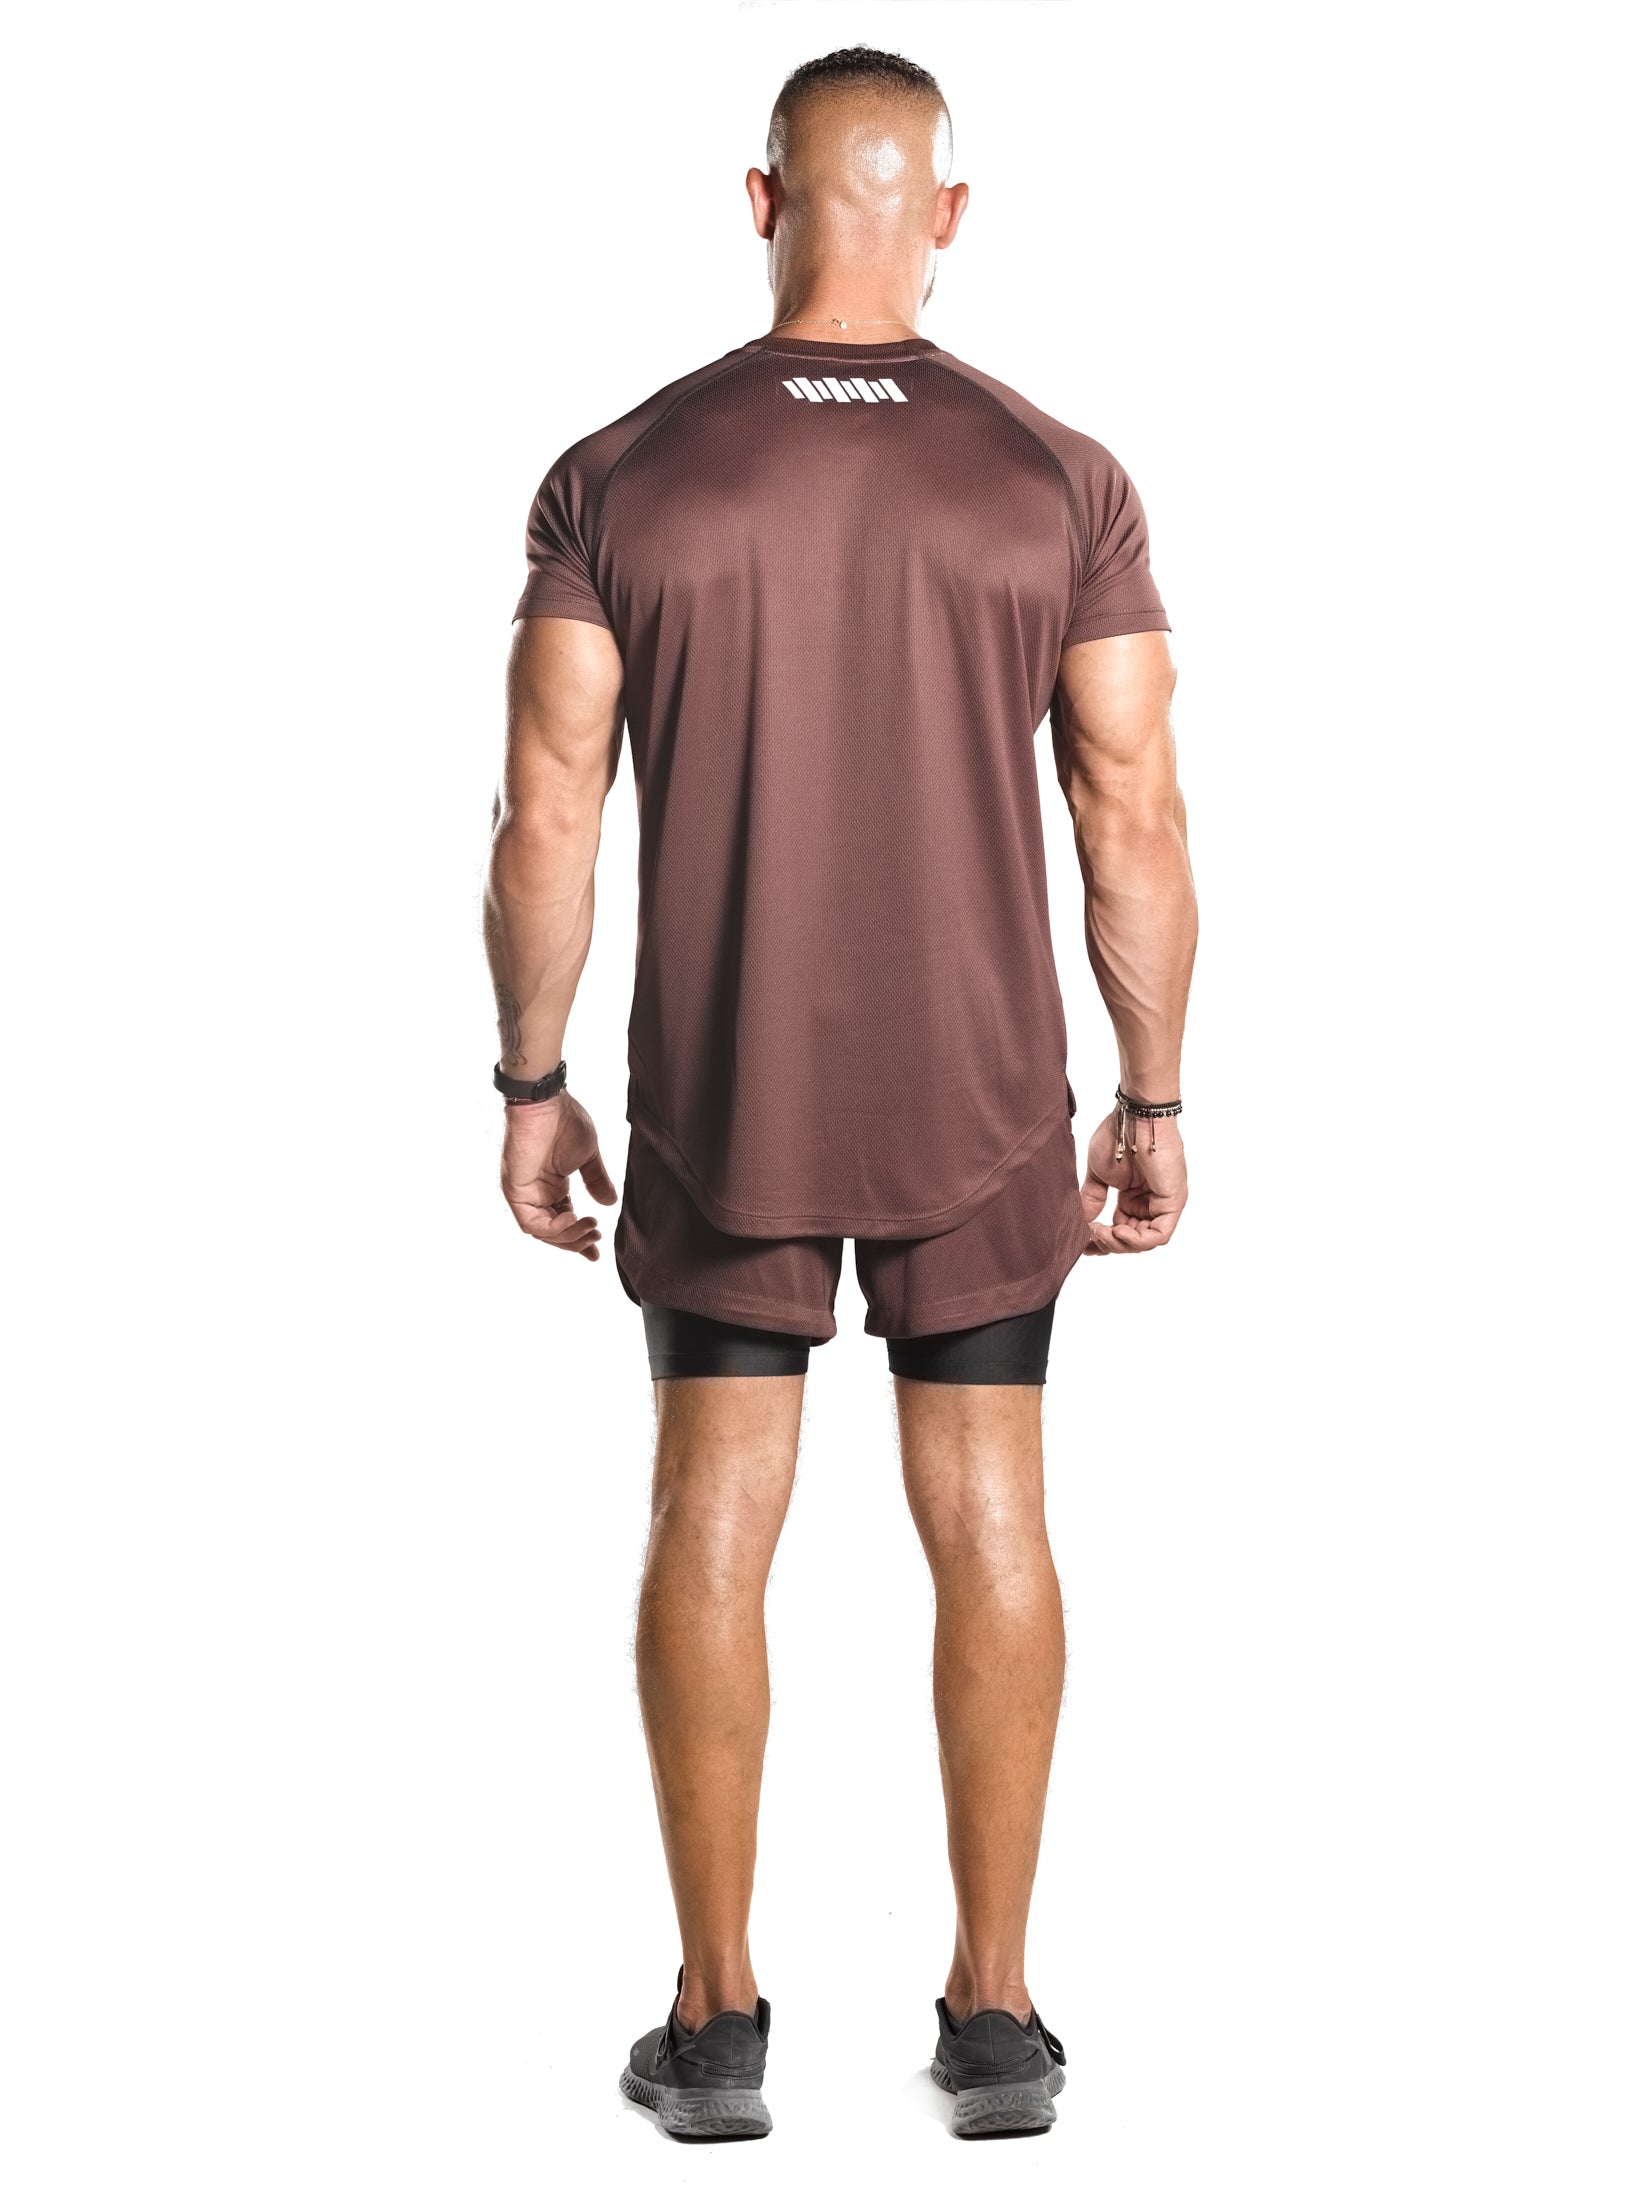 ULTRA Mesh Raglan T-Shirt [Brown] -  - Gym Apparel Egypt